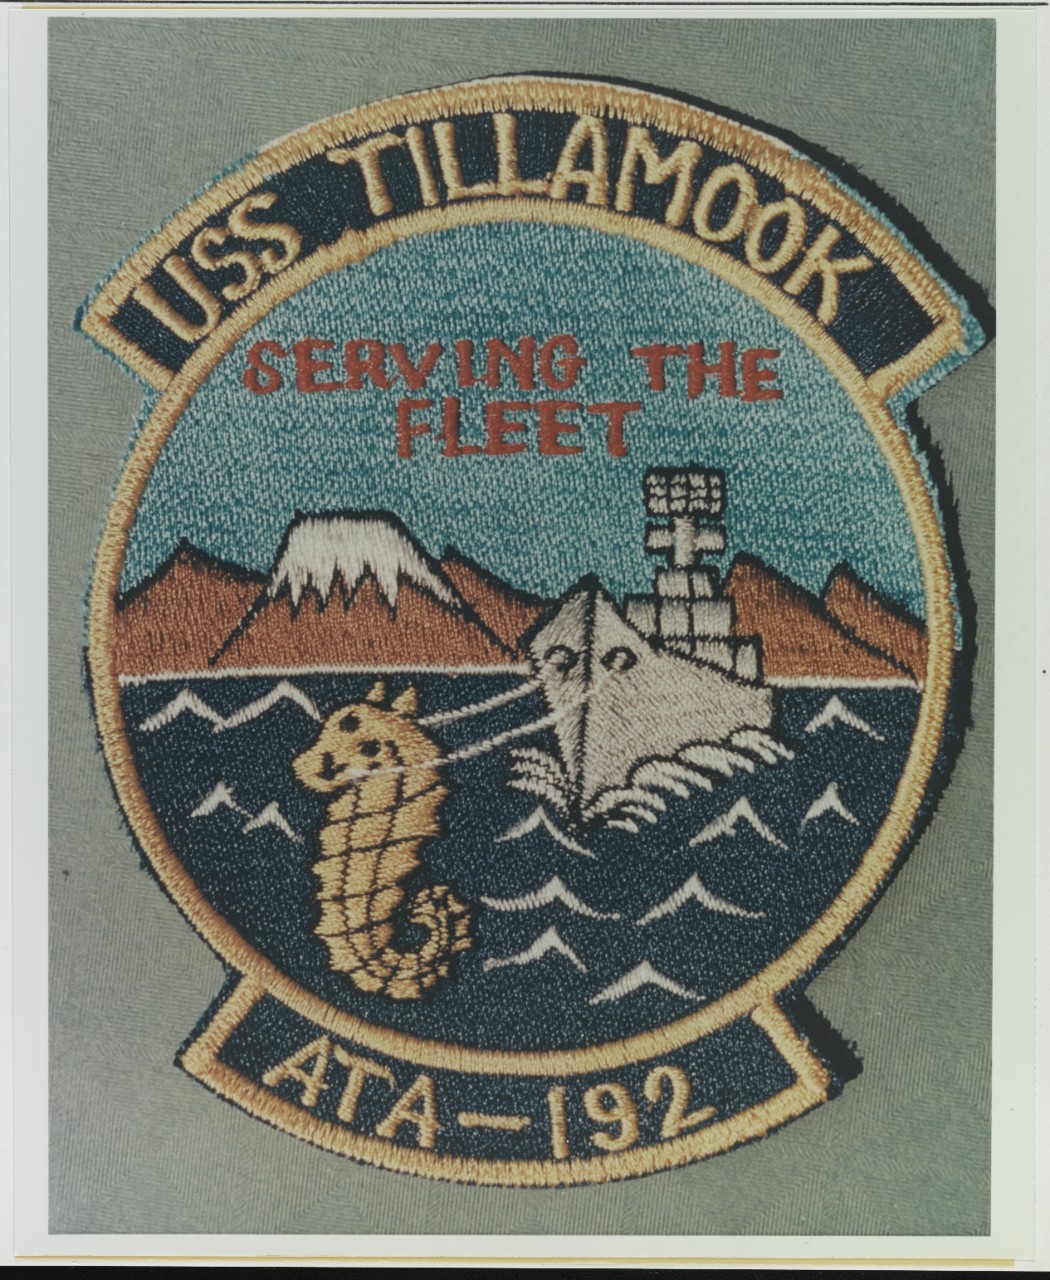 Insignia: USS TILLAMOOK (ATA-192)